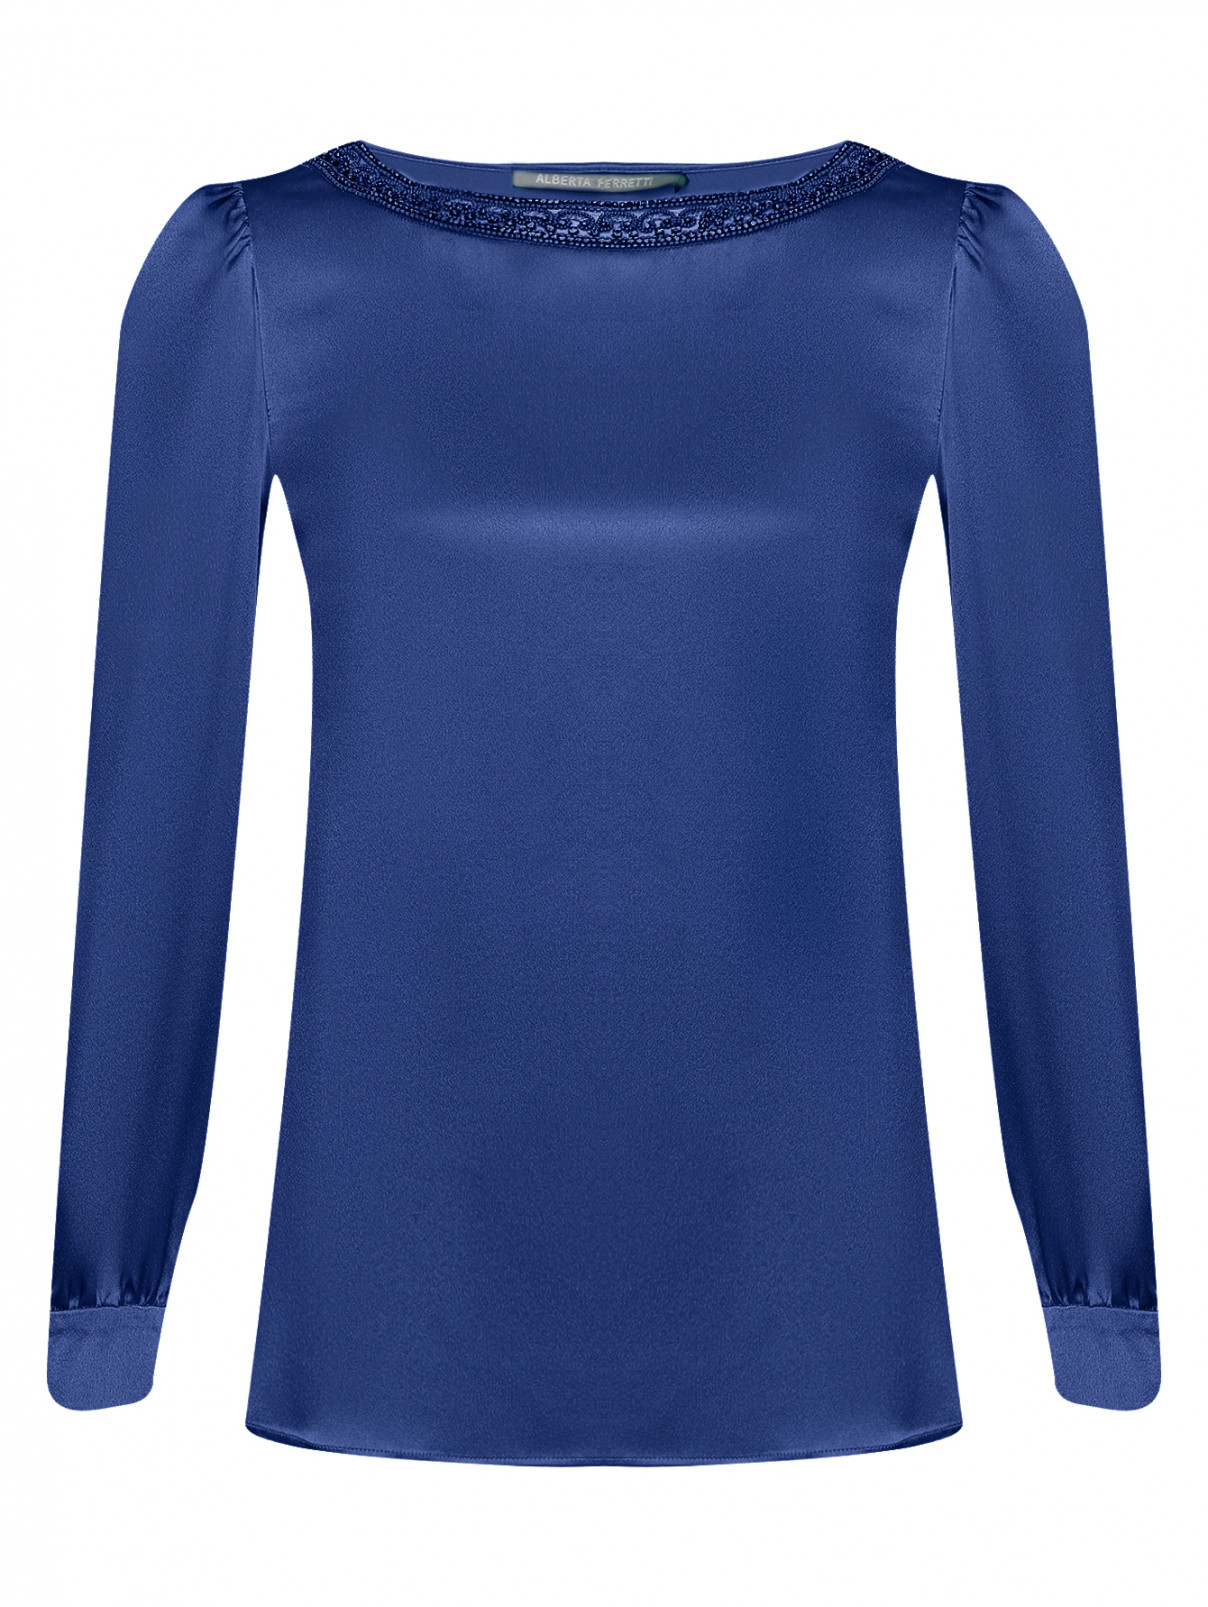 Блуза из шелка с декоративной отделкой Alberta Ferretti  –  Общий вид  – Цвет:  Синий